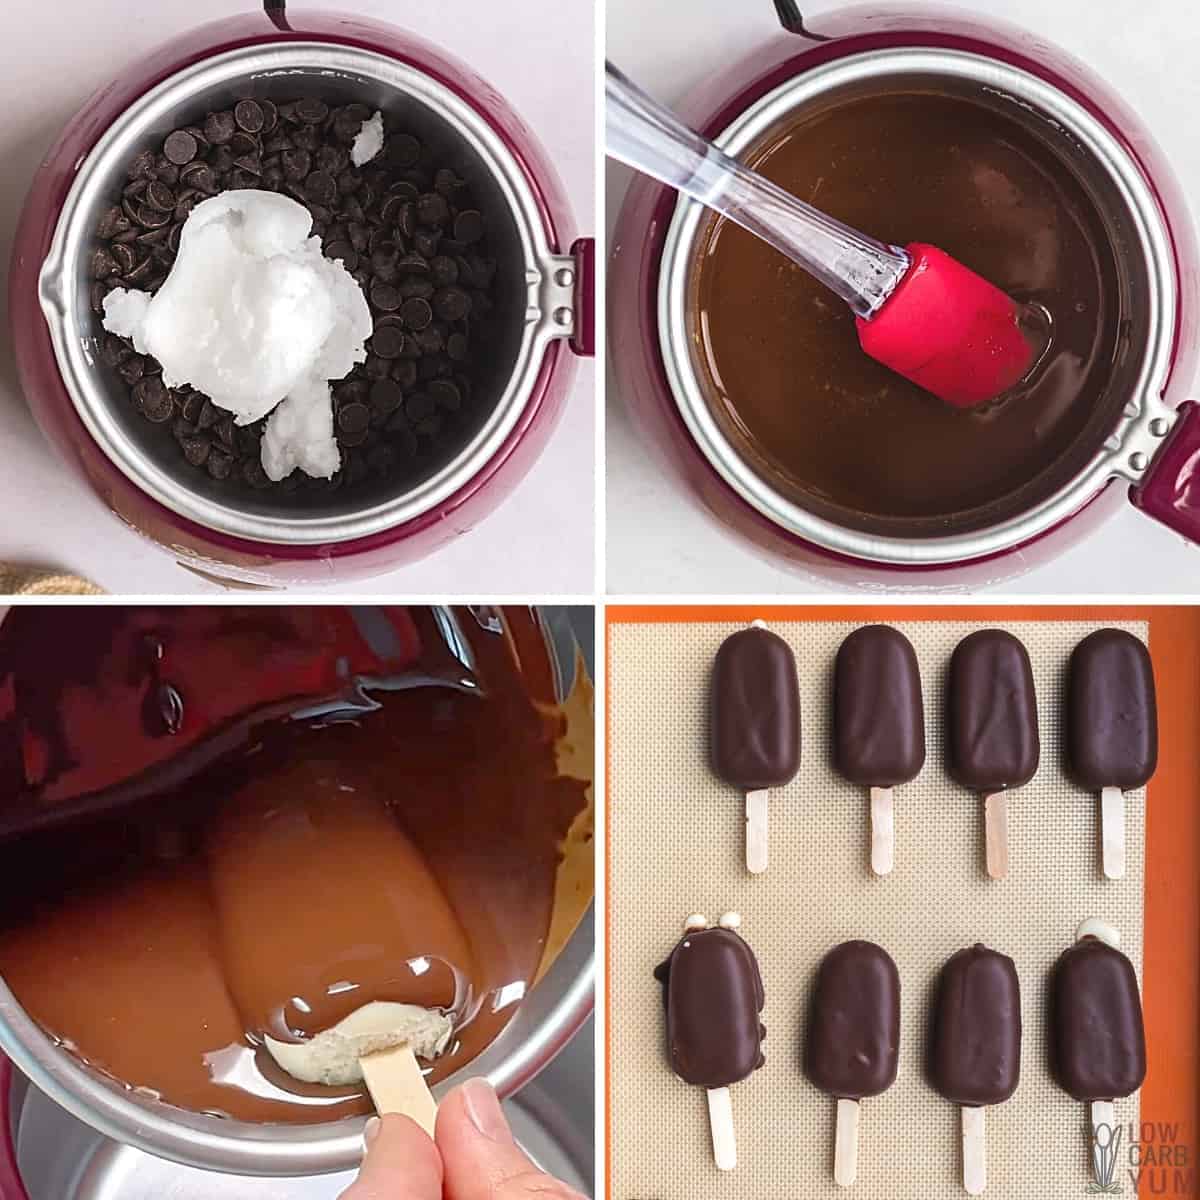 coating the ice cream bar with chocolate